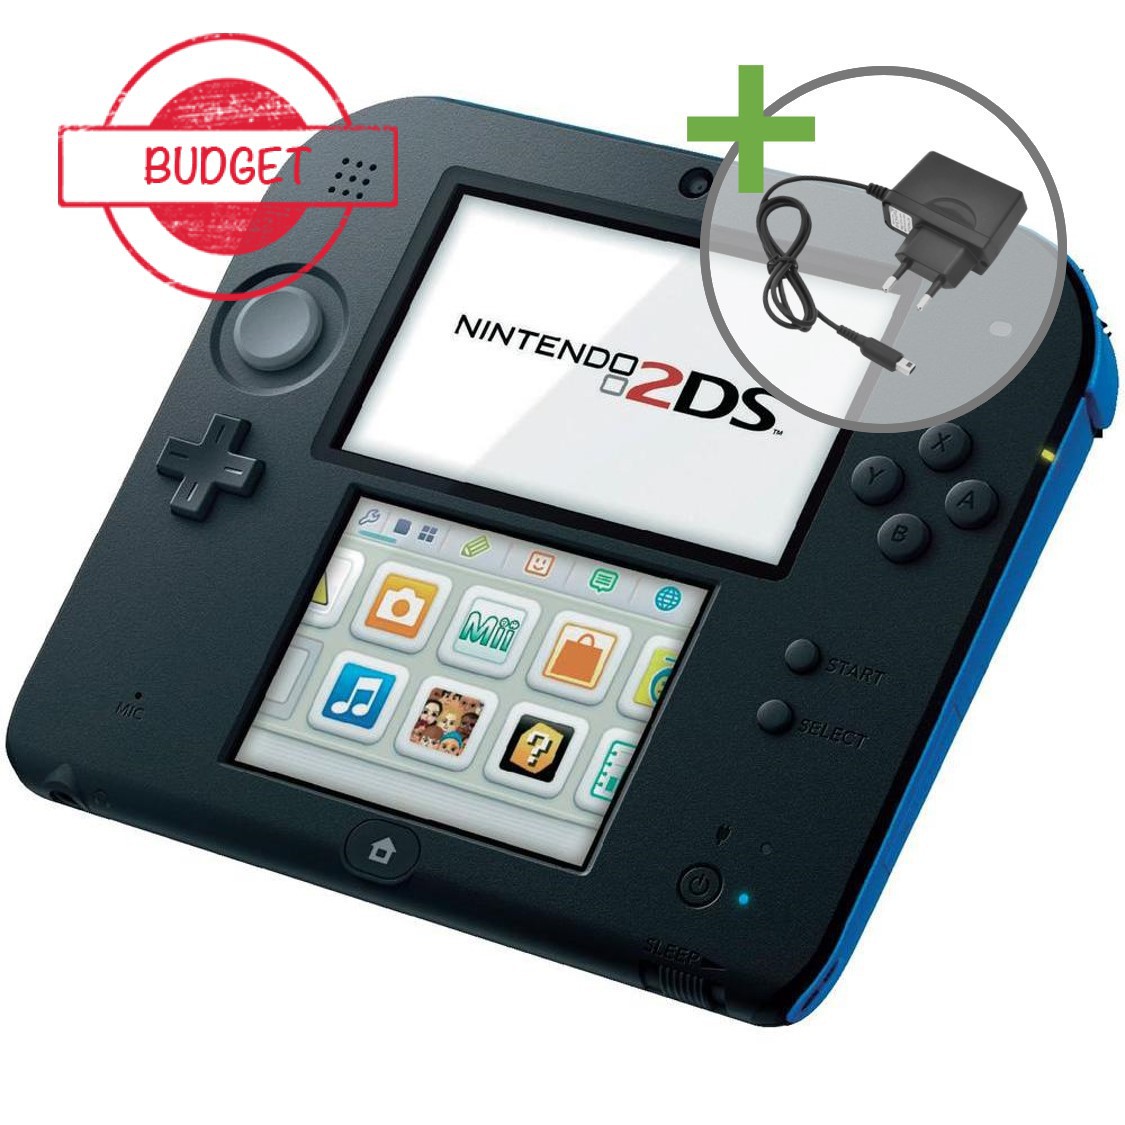 Nintendo 2DS - Black/Blue (Electric Blue) - Budget - Nintendo 3DS Hardware